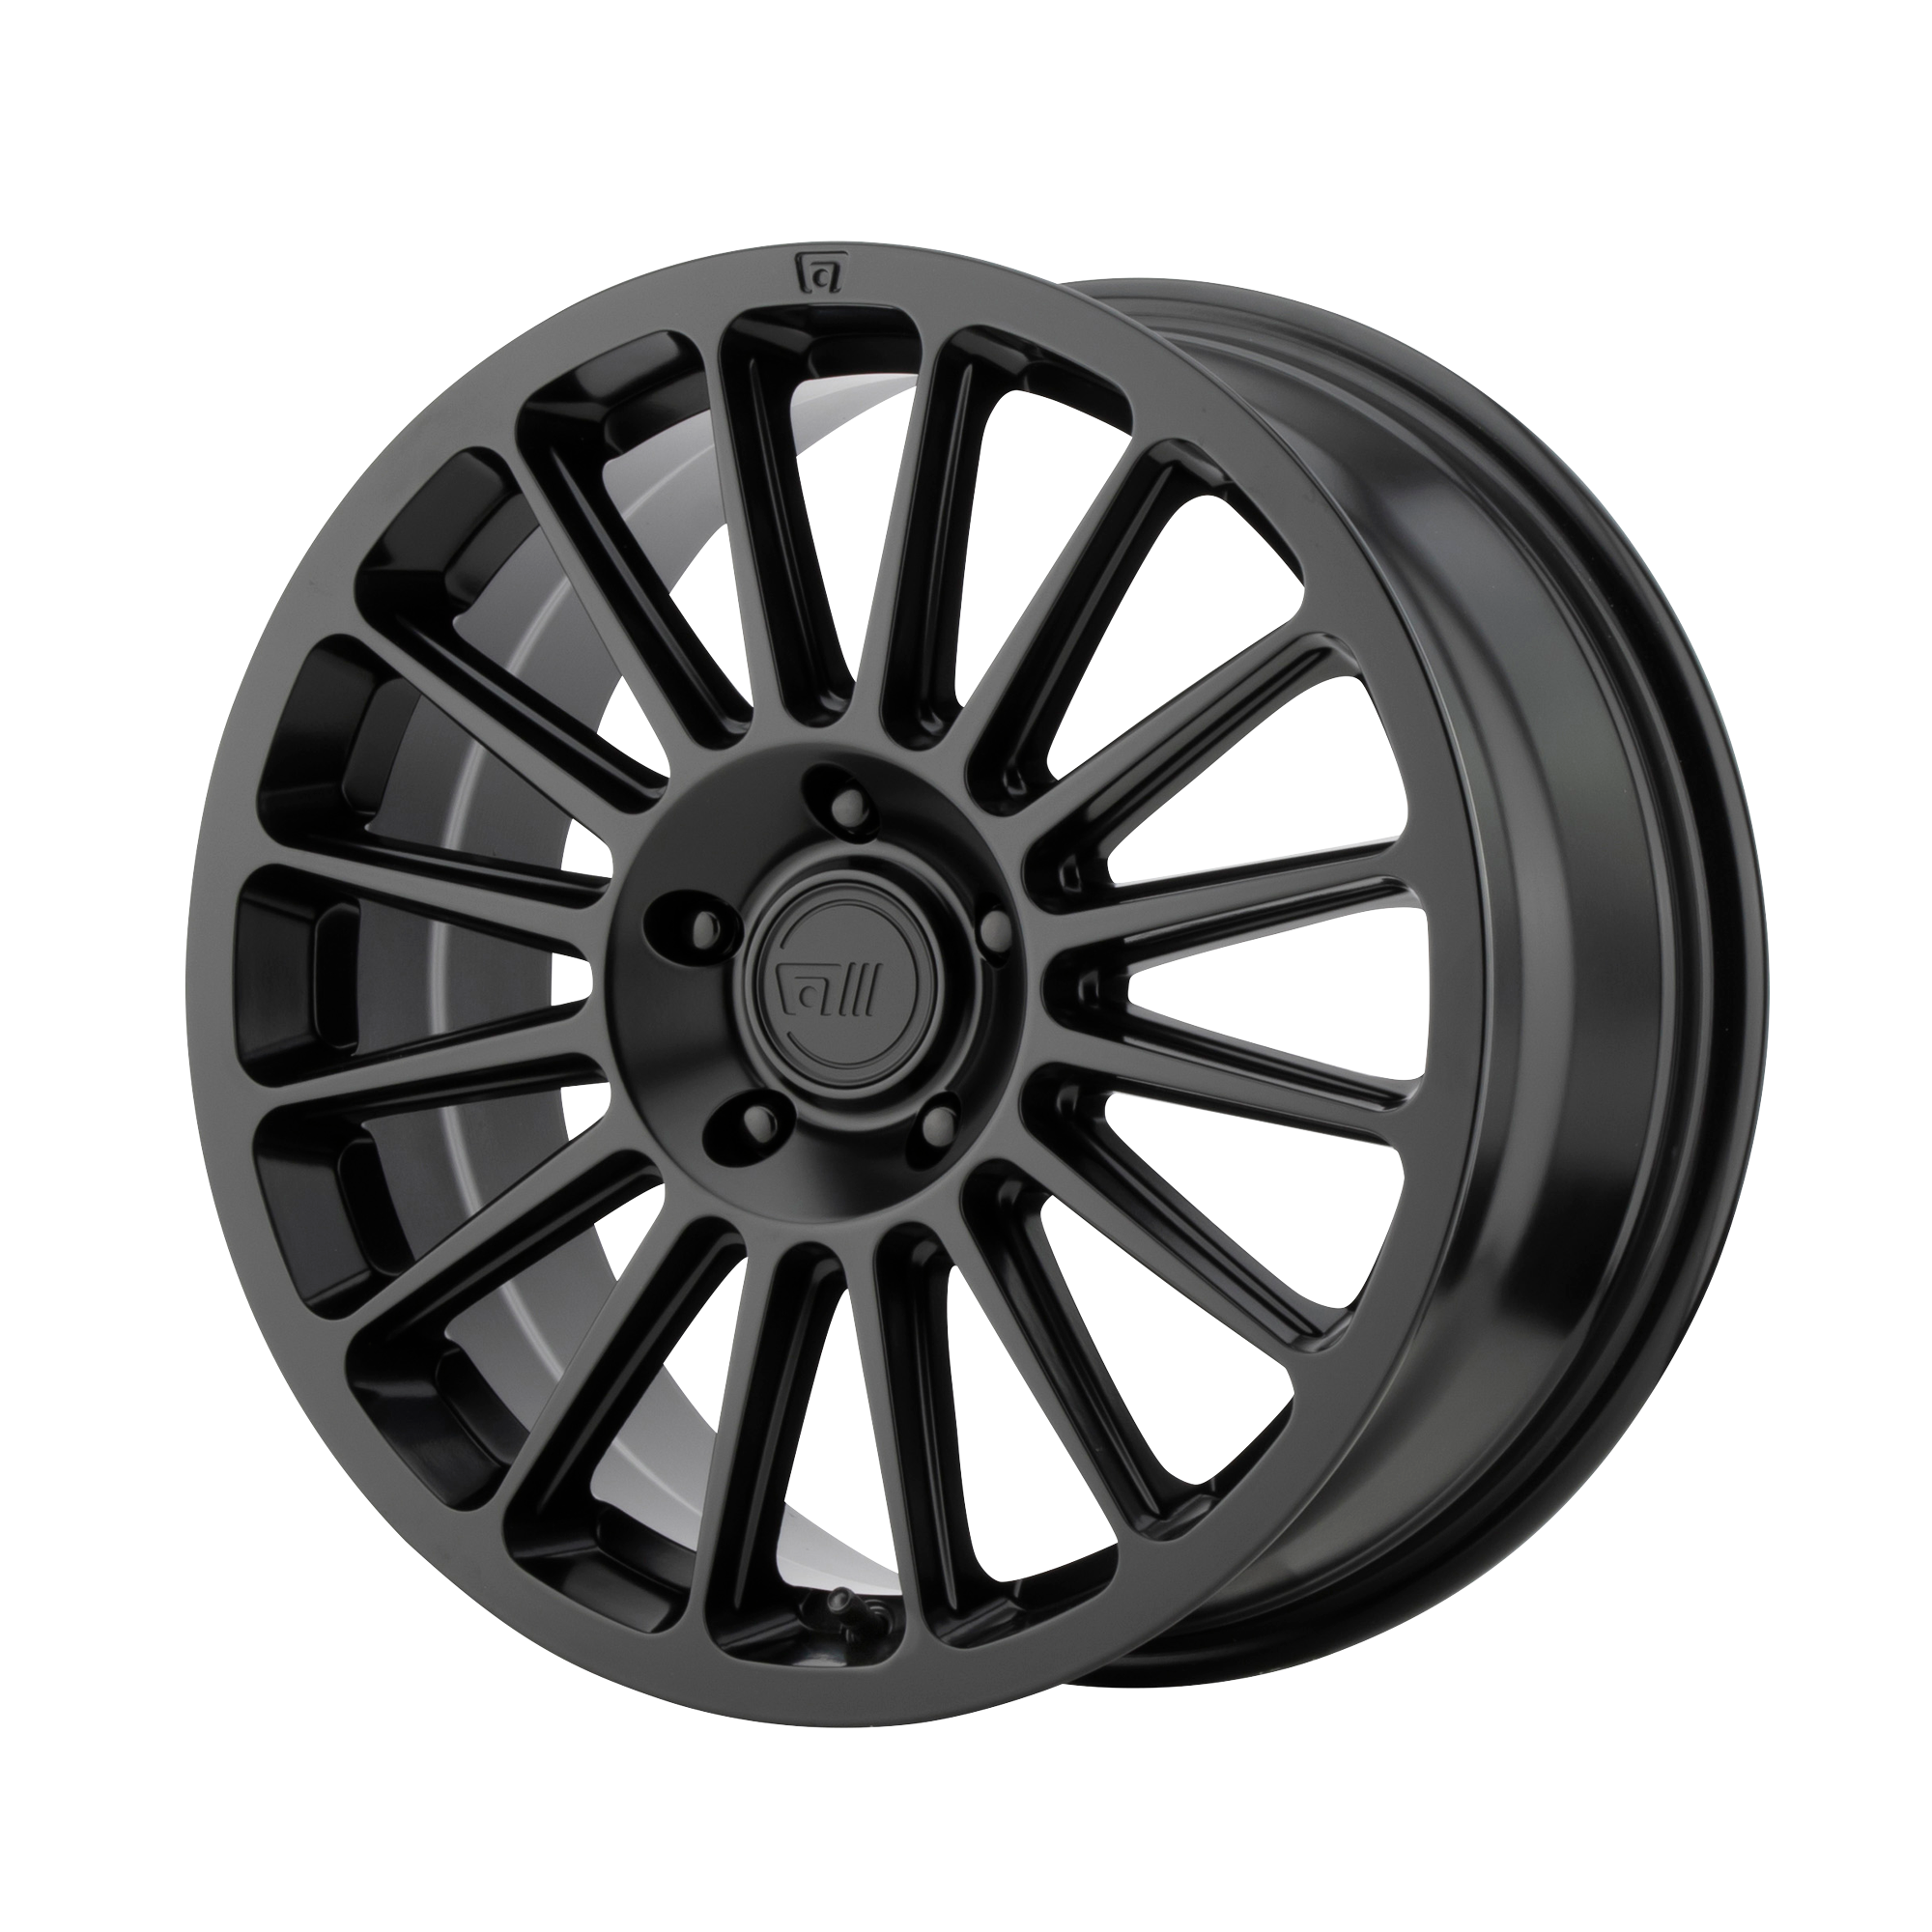 MR141 16x7.5 5x100.00 SATIN BLACK (40 mm) - Tires and Engine Performance